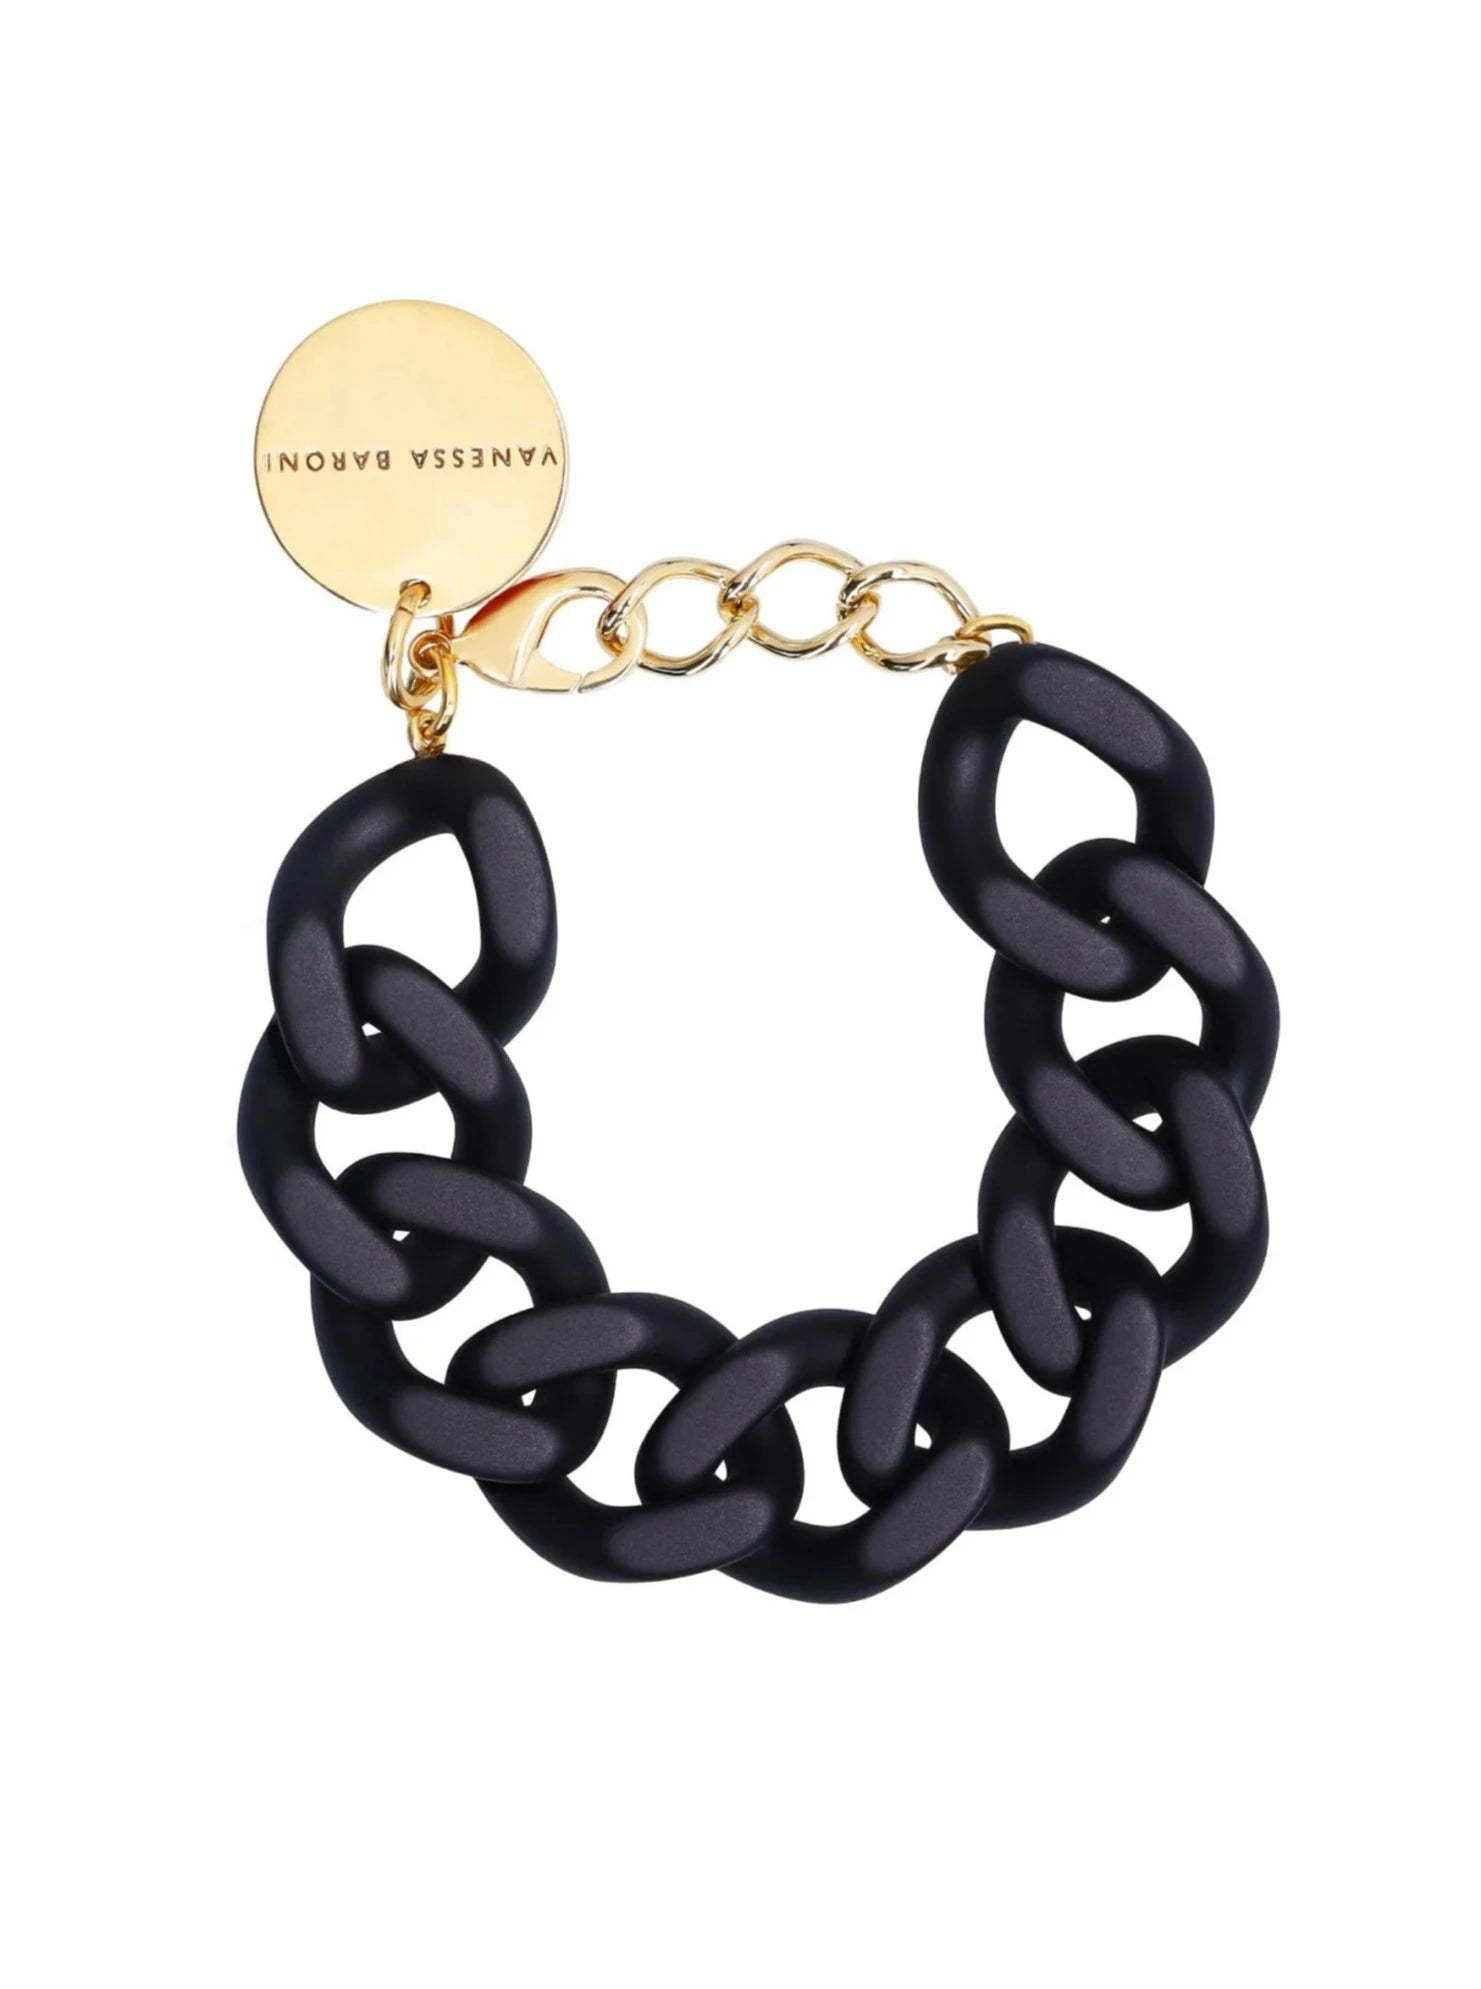 Flat chain bracelet, matt black